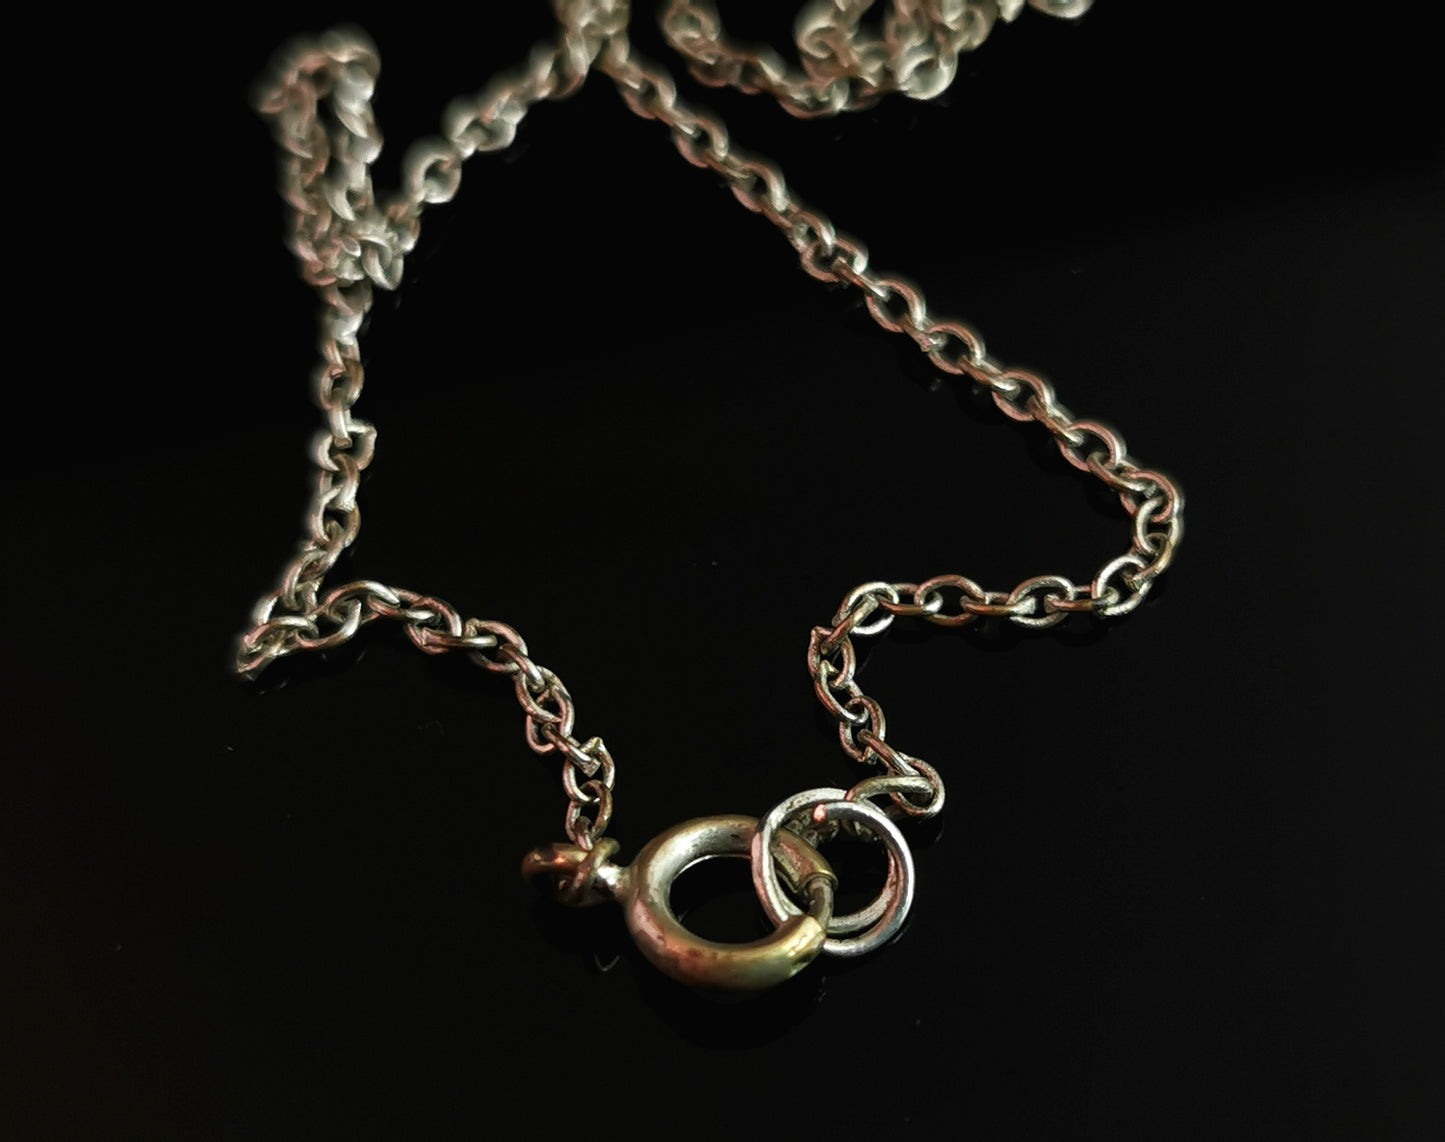 Antique silver Love Mother pendant, Ivy leaf, necklace